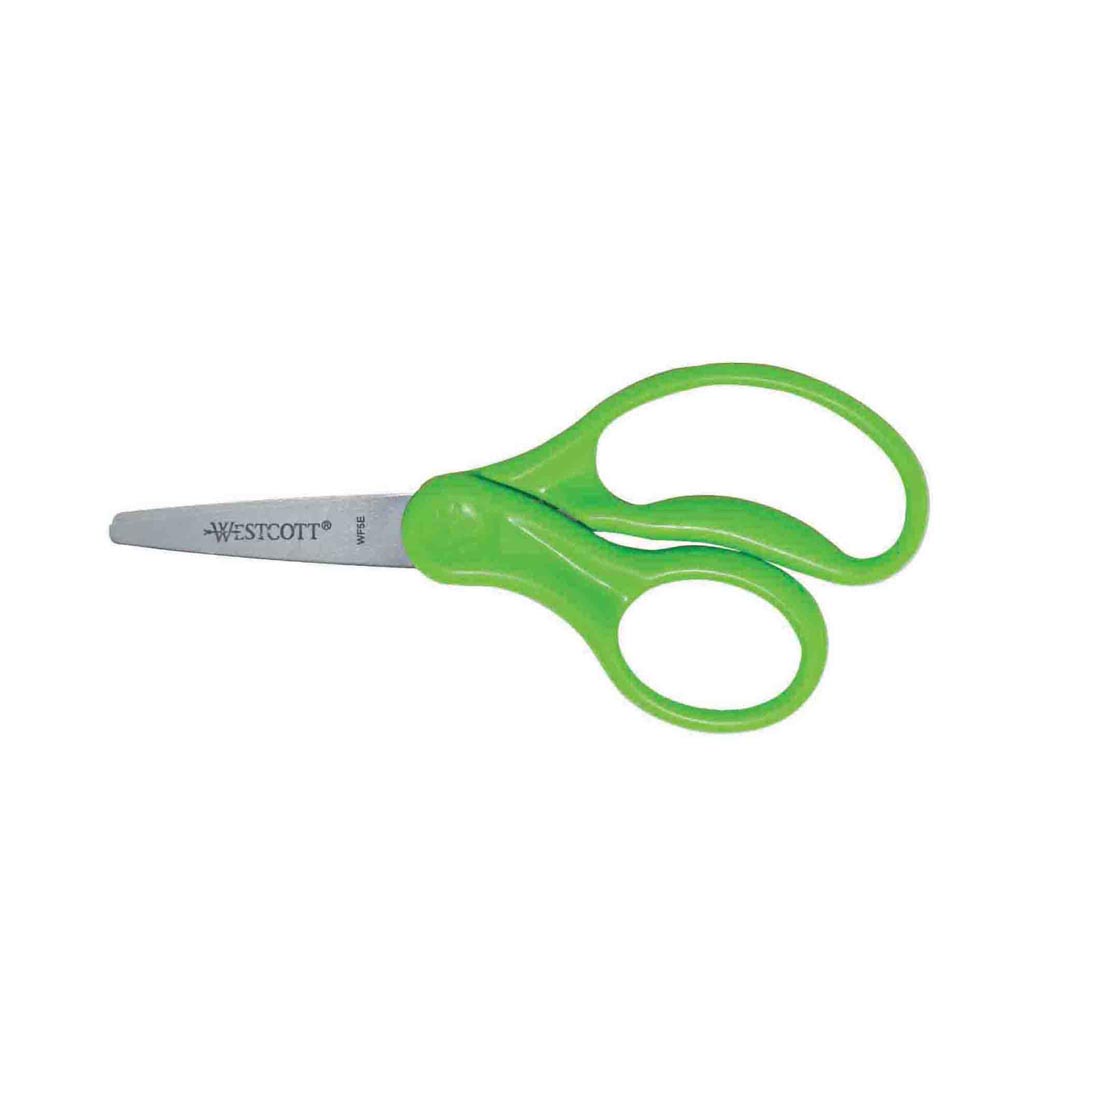 left-handed kids' scissors